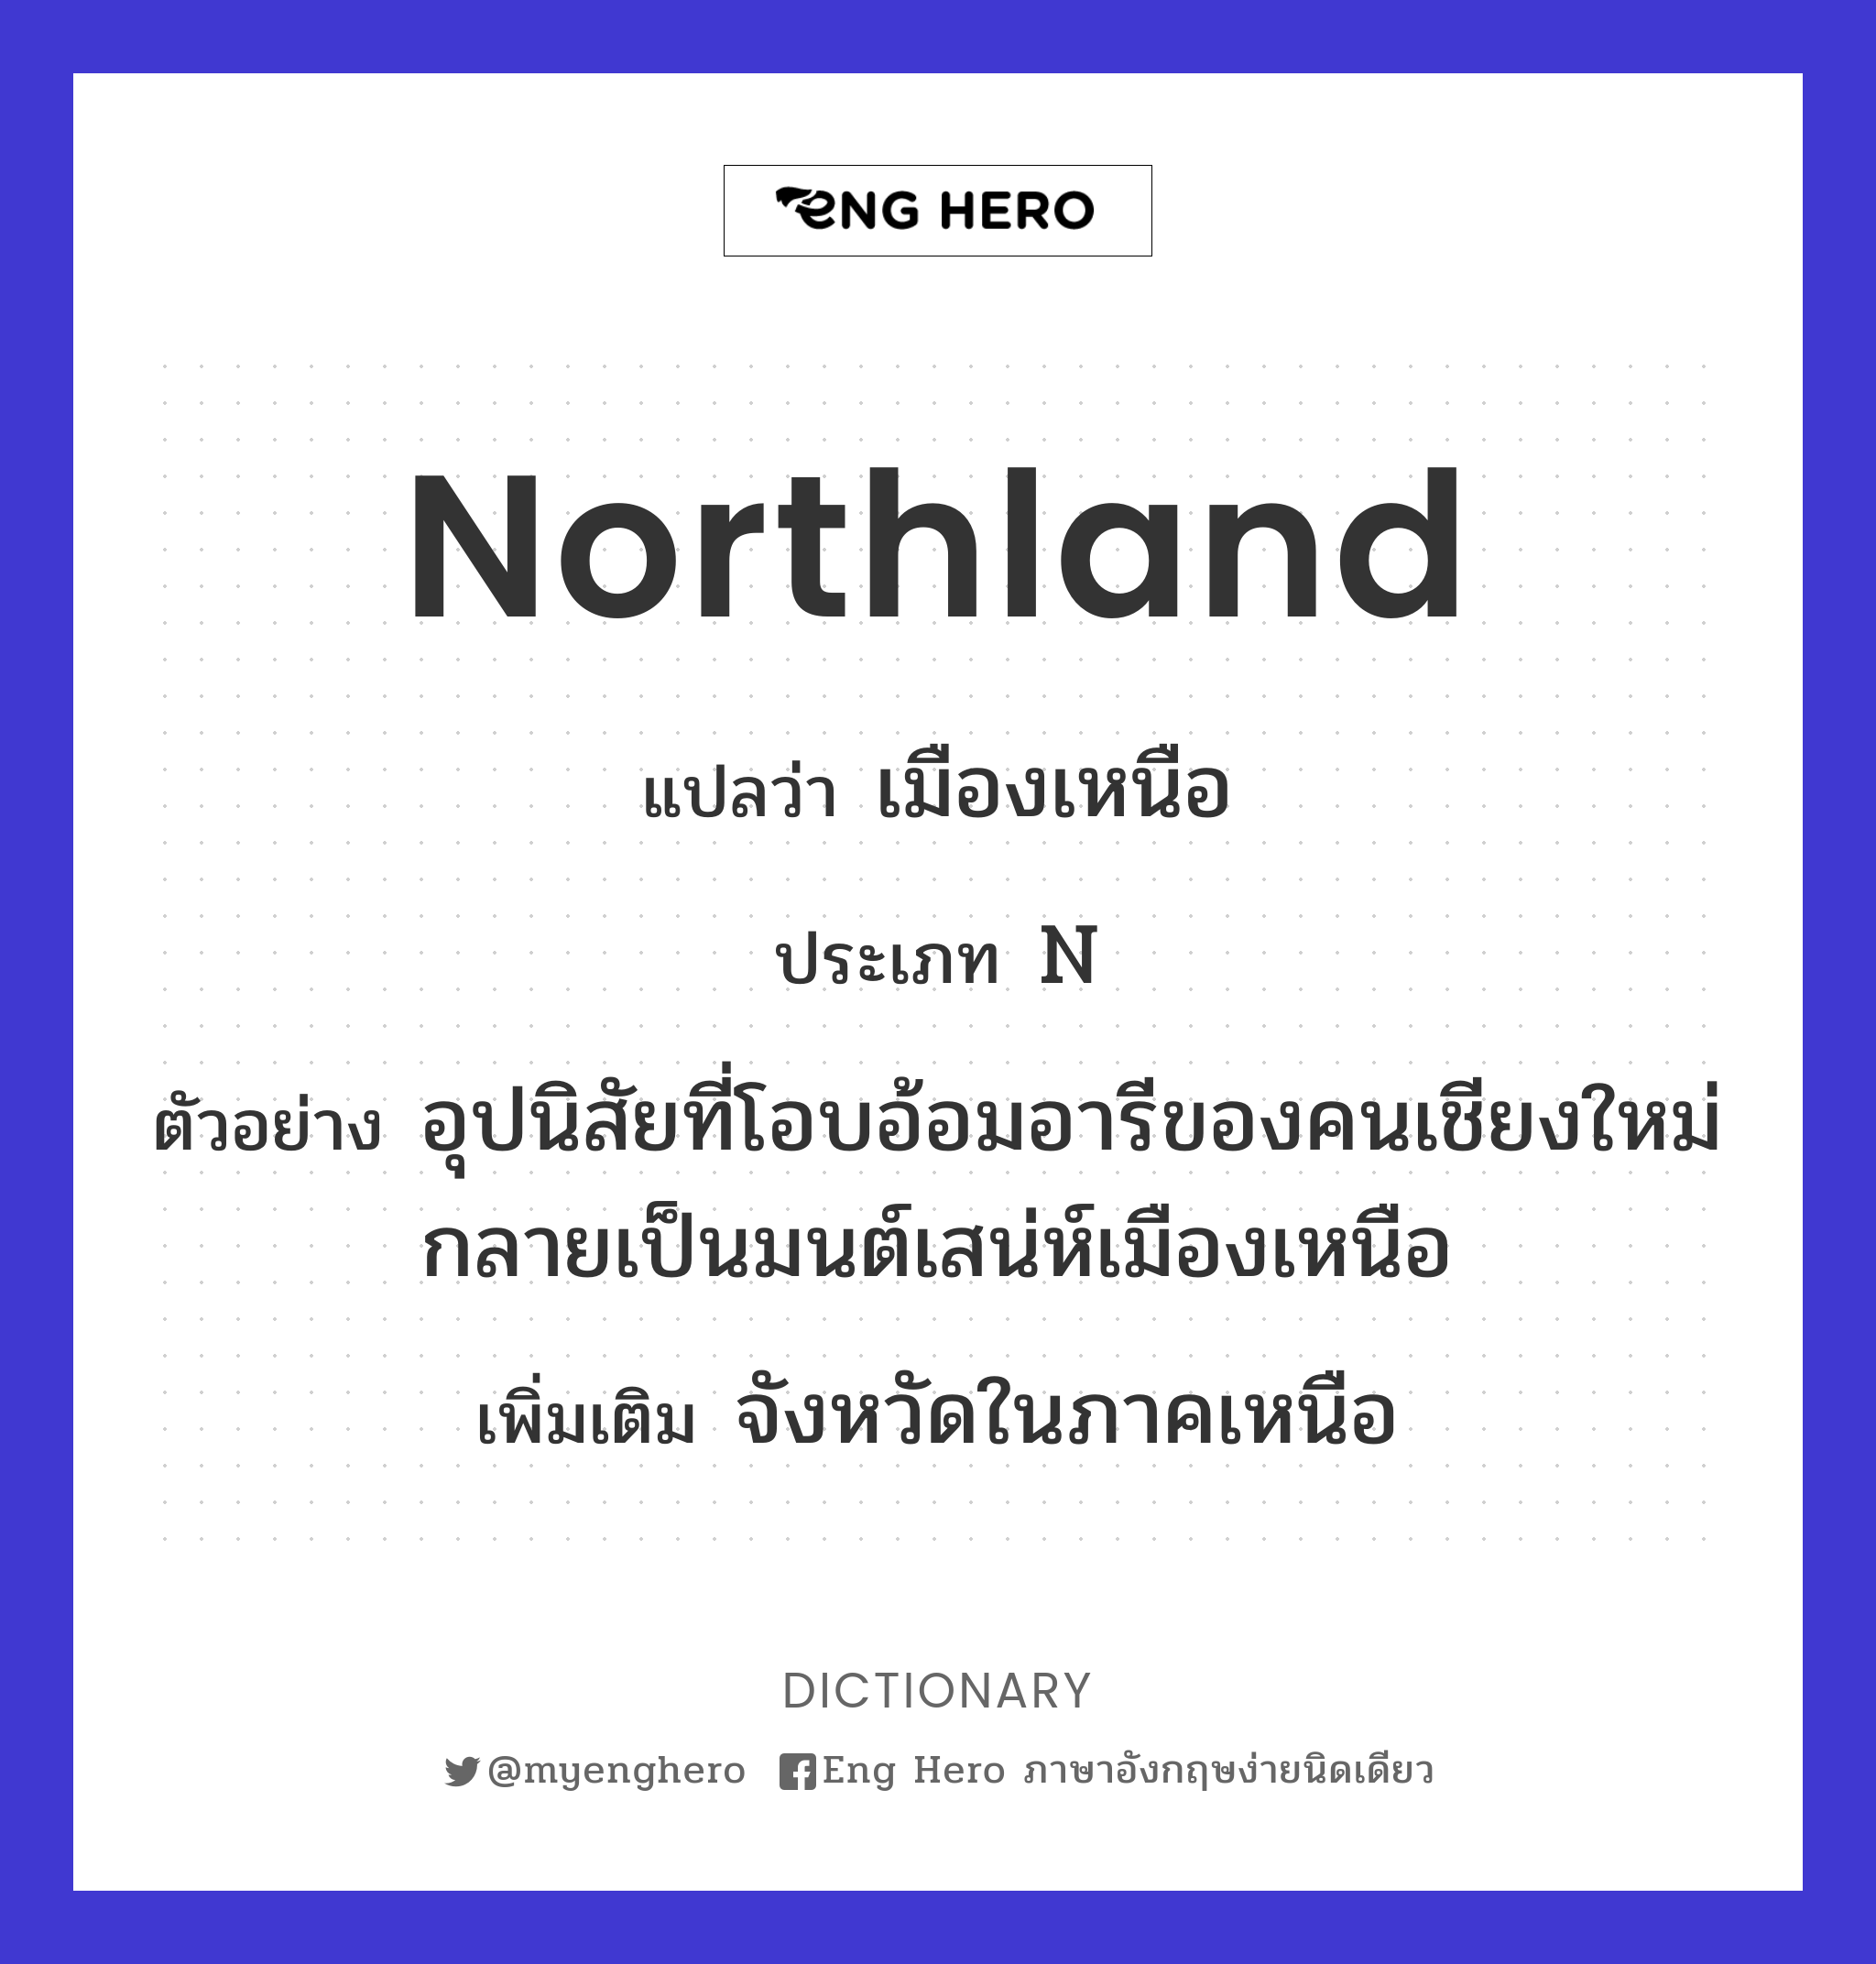 northland